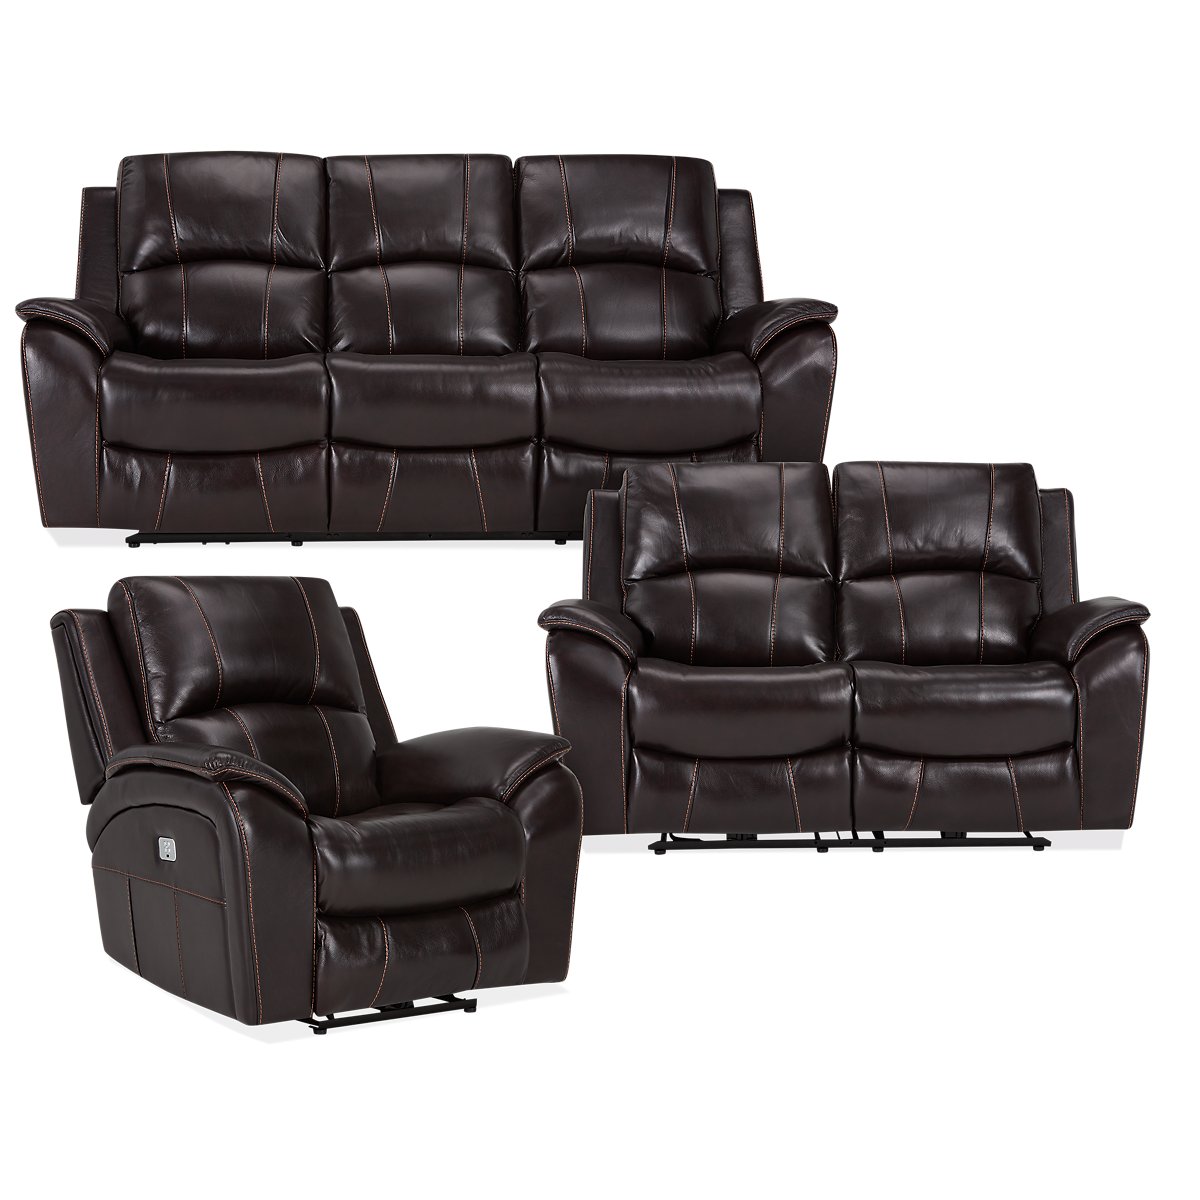 City Furniture: Memphis Dark Brown Leather Power Reclining Sofa